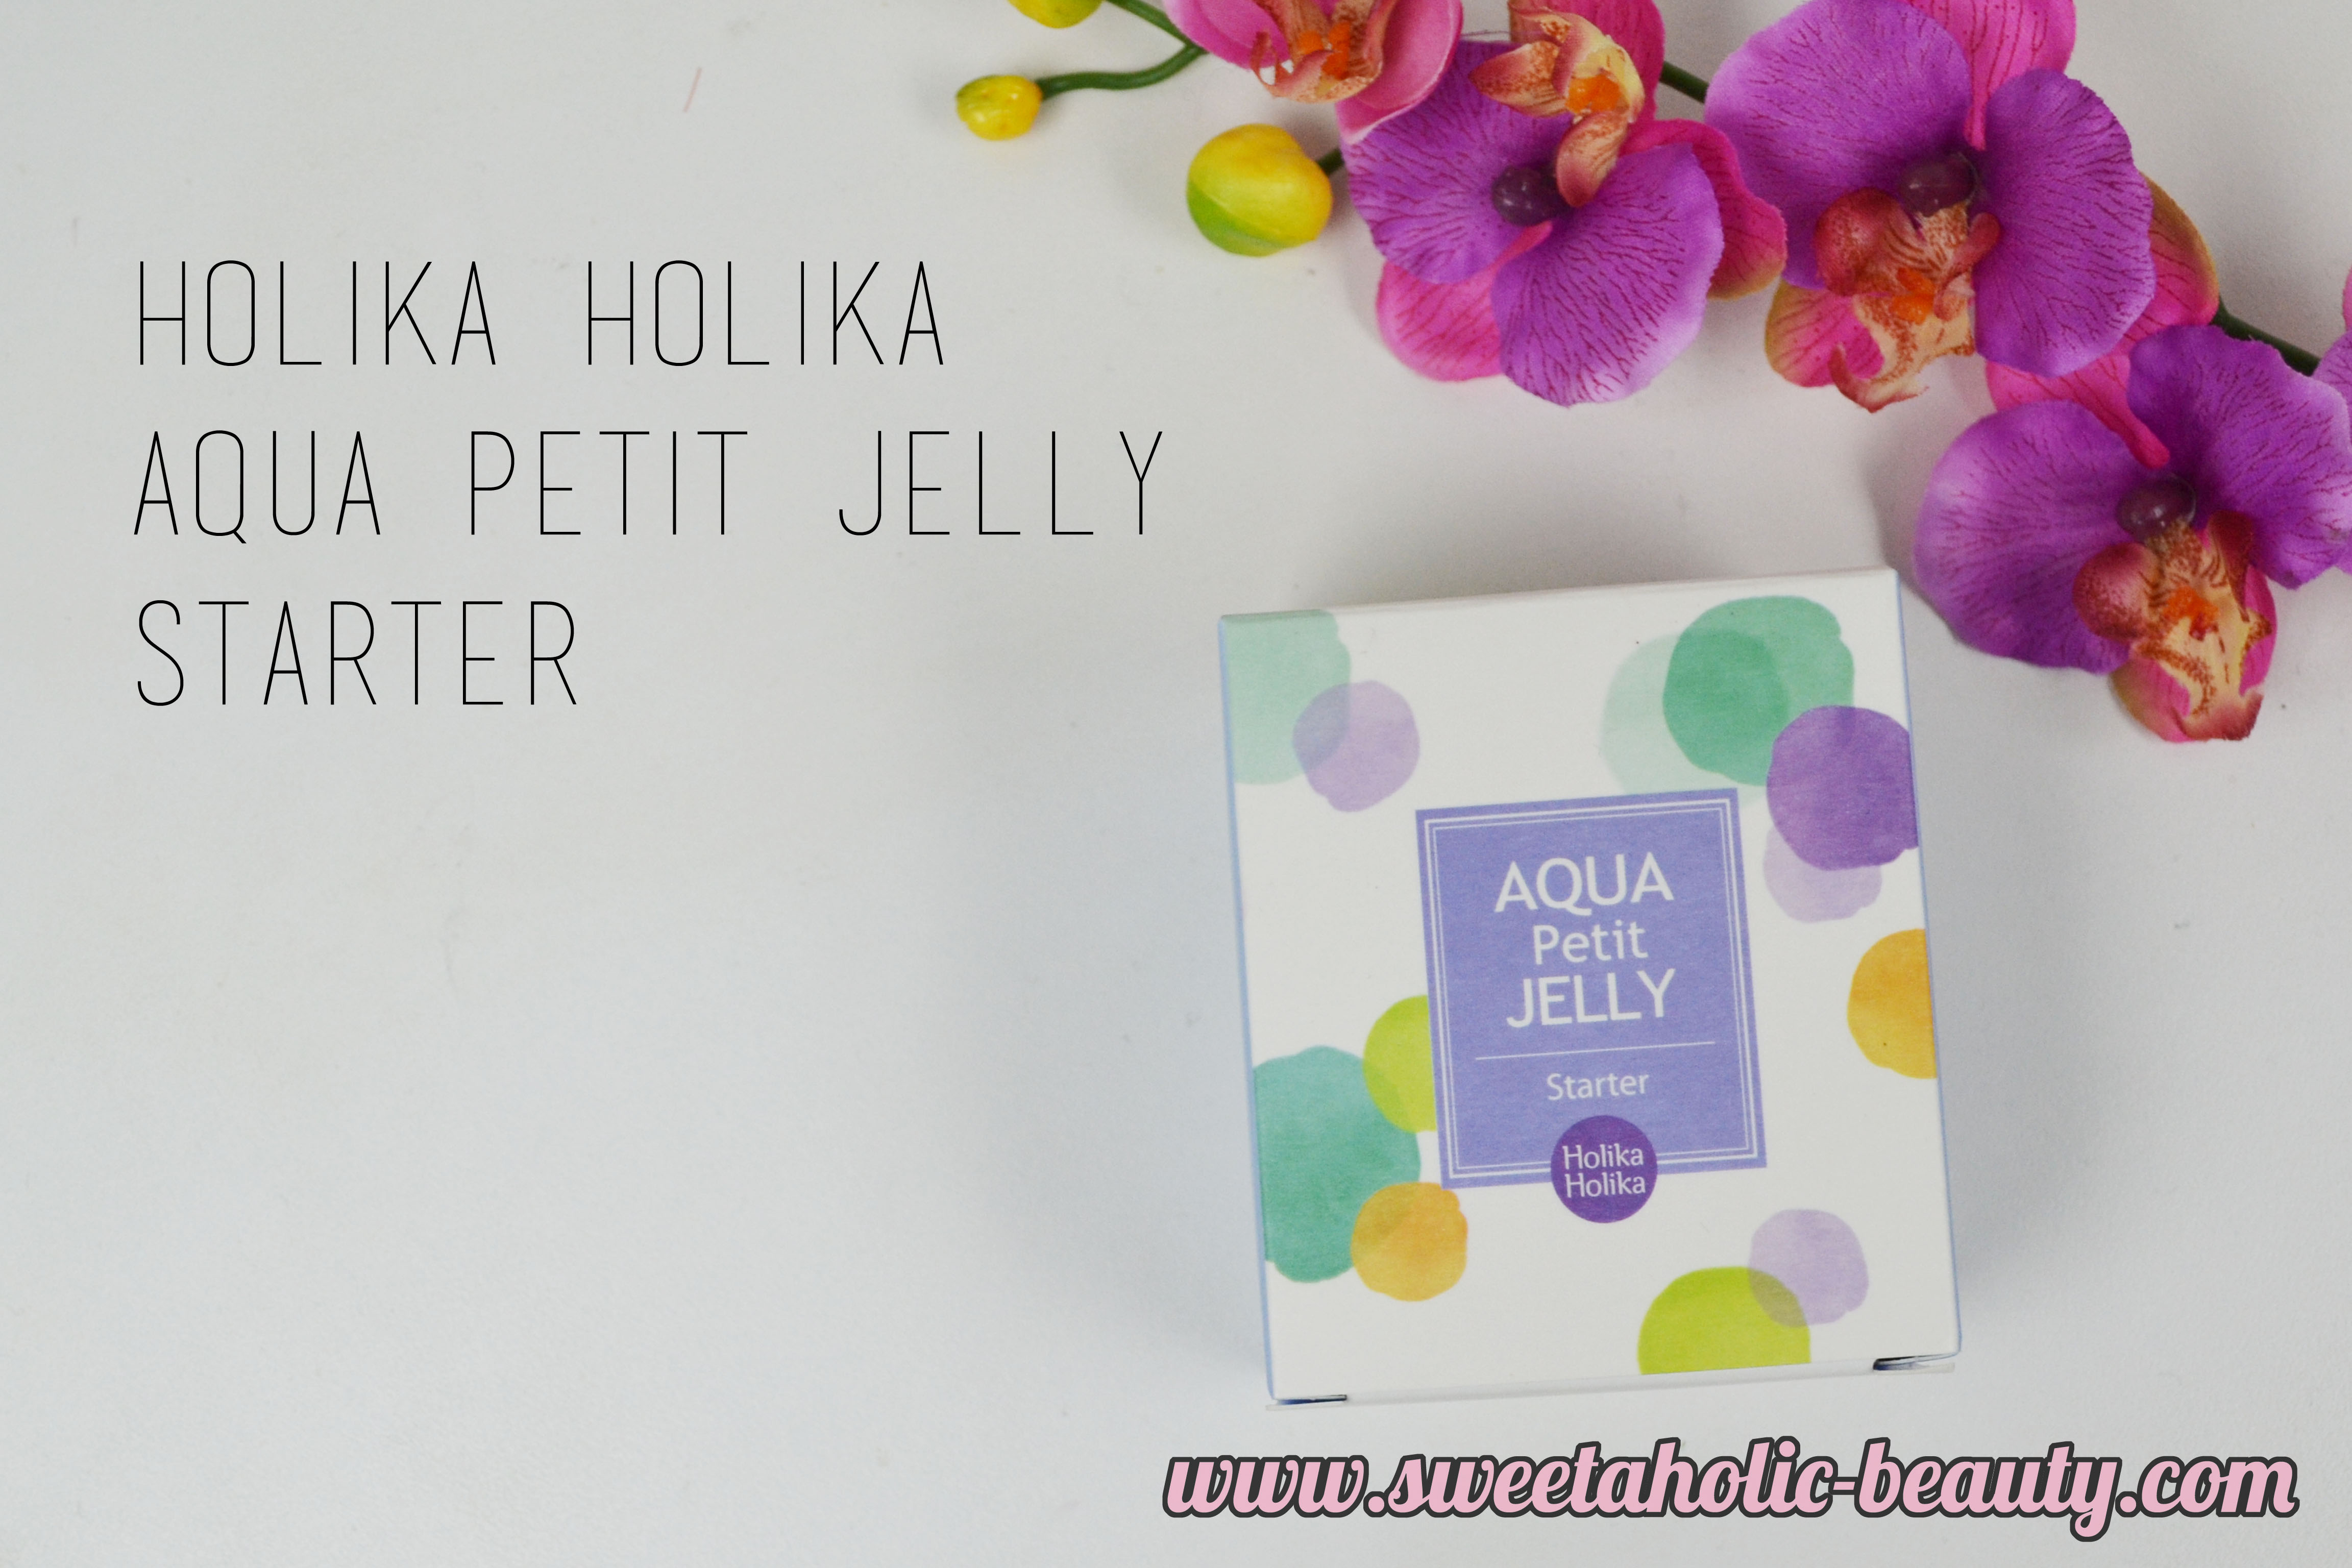 Holika Holika Aqua Petit Jelly Starter Review - Sweetaholic Beauty